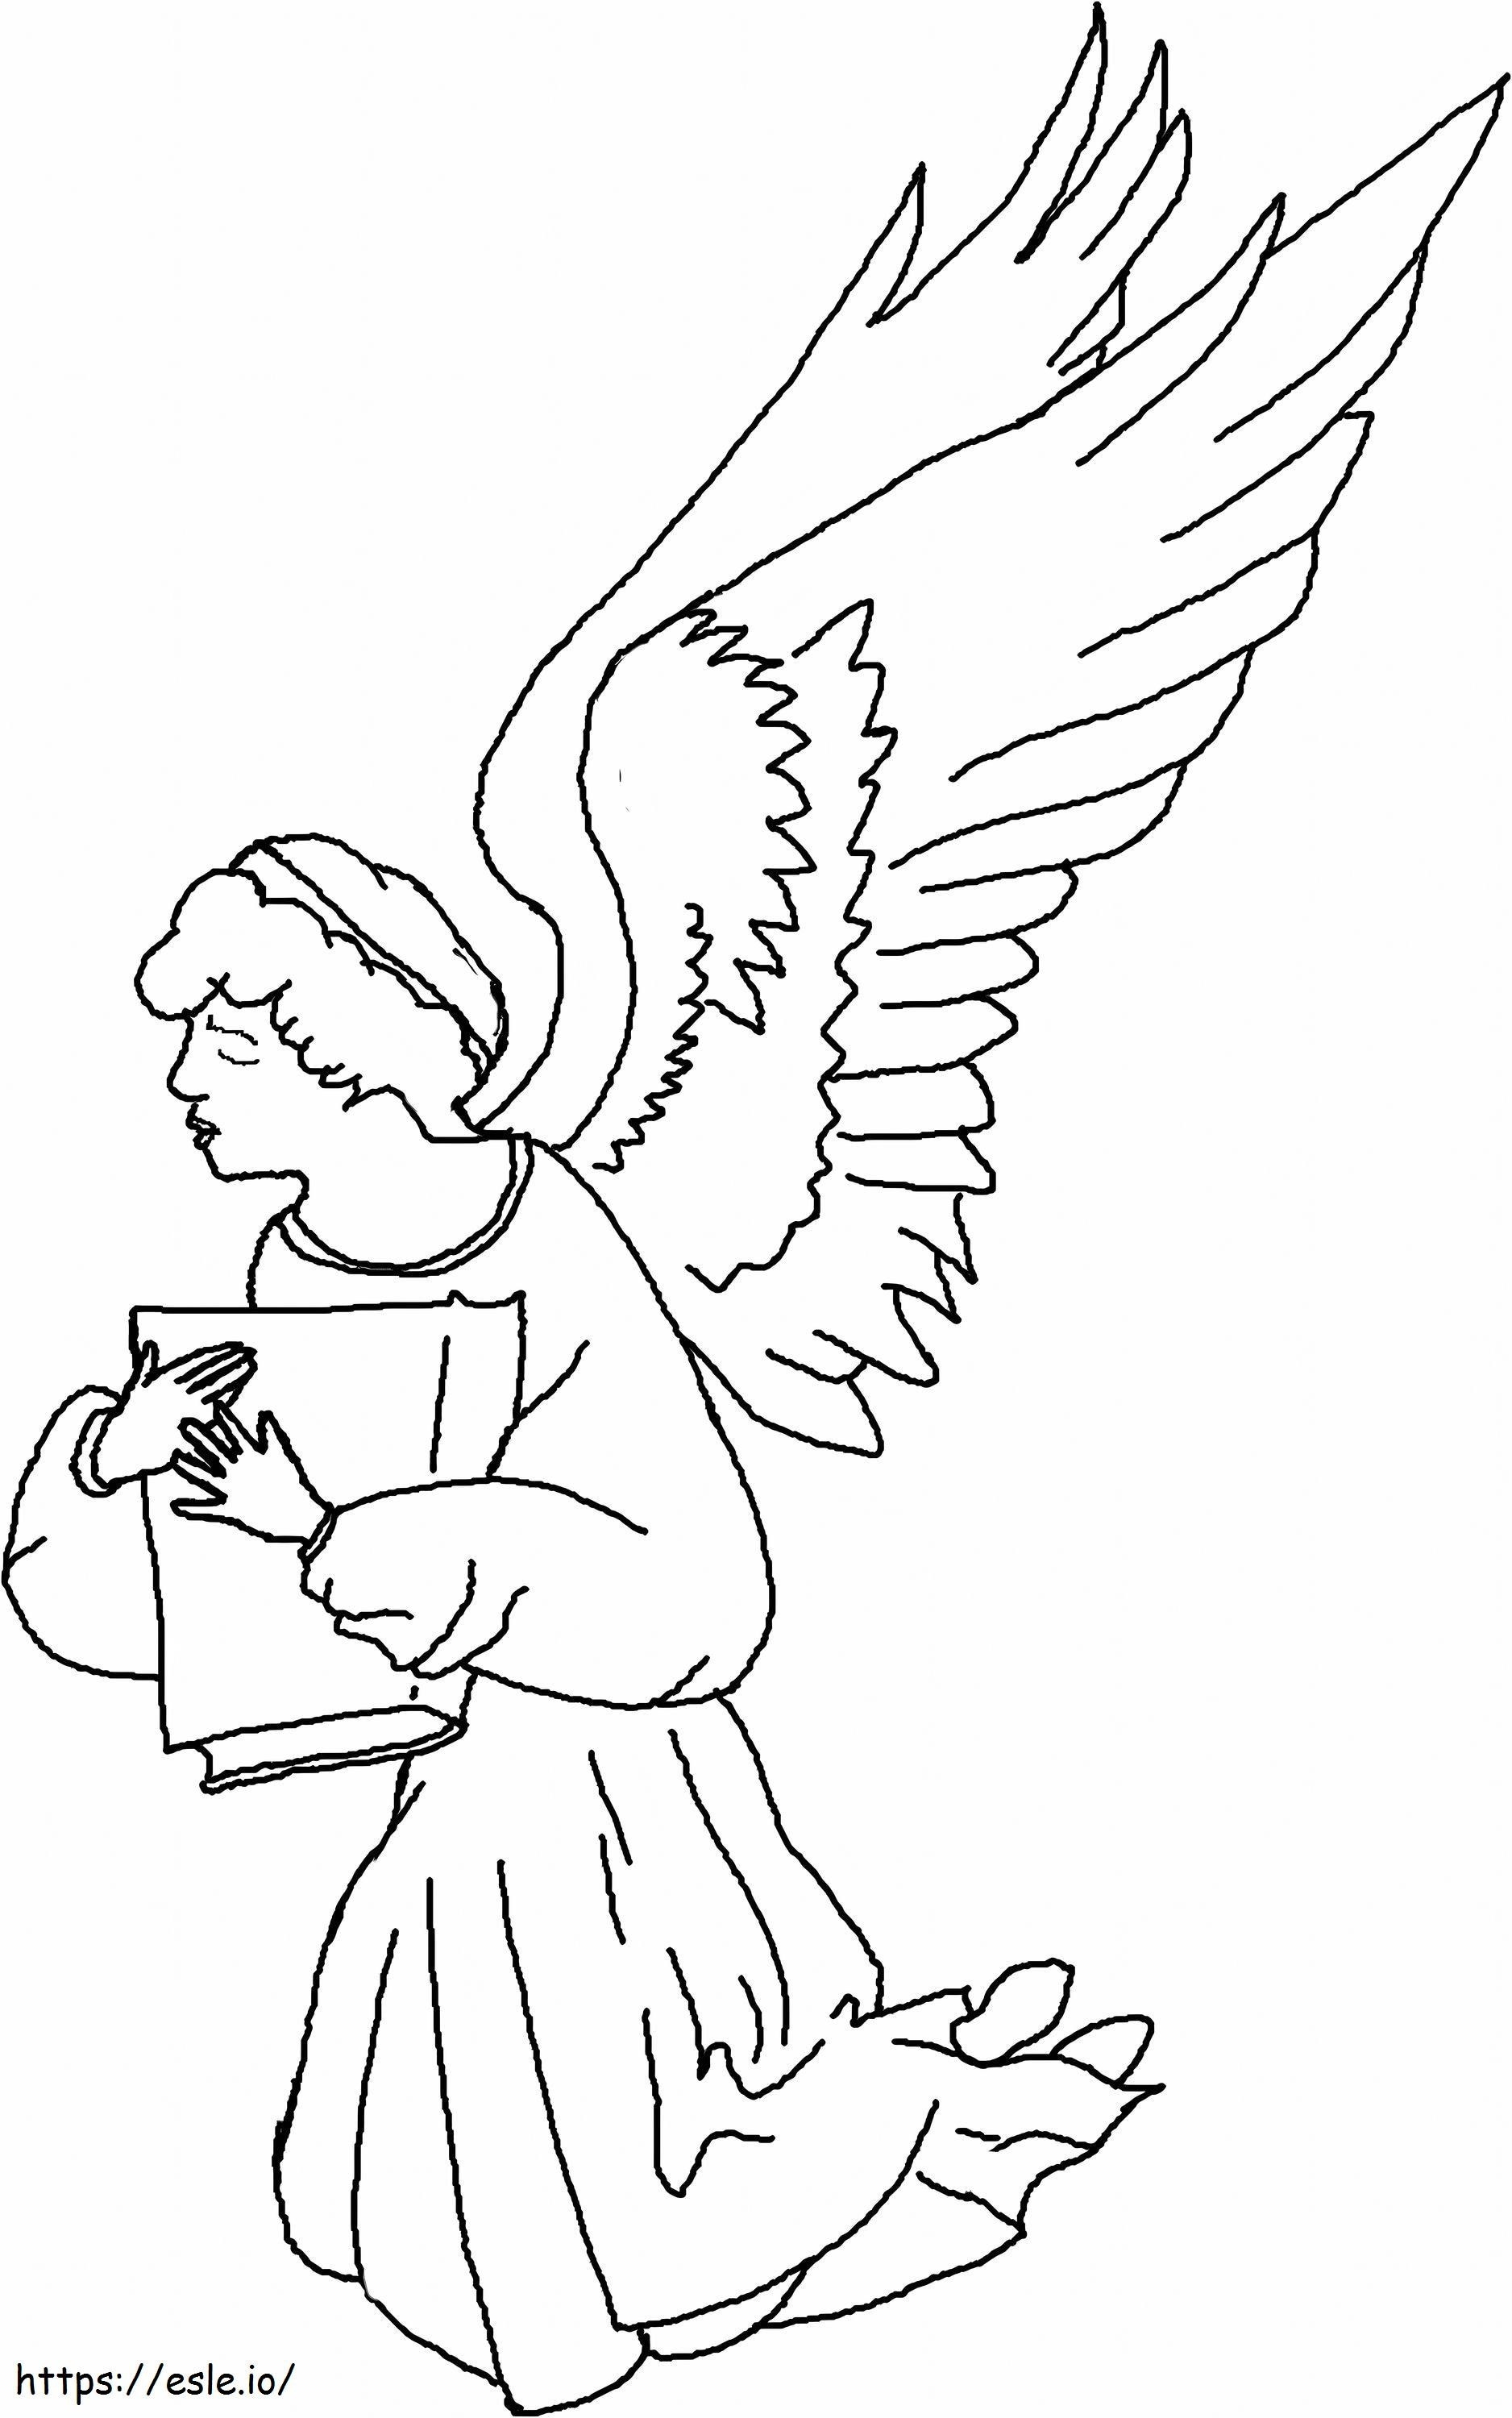 Libro de explotación de ángeles para colorear